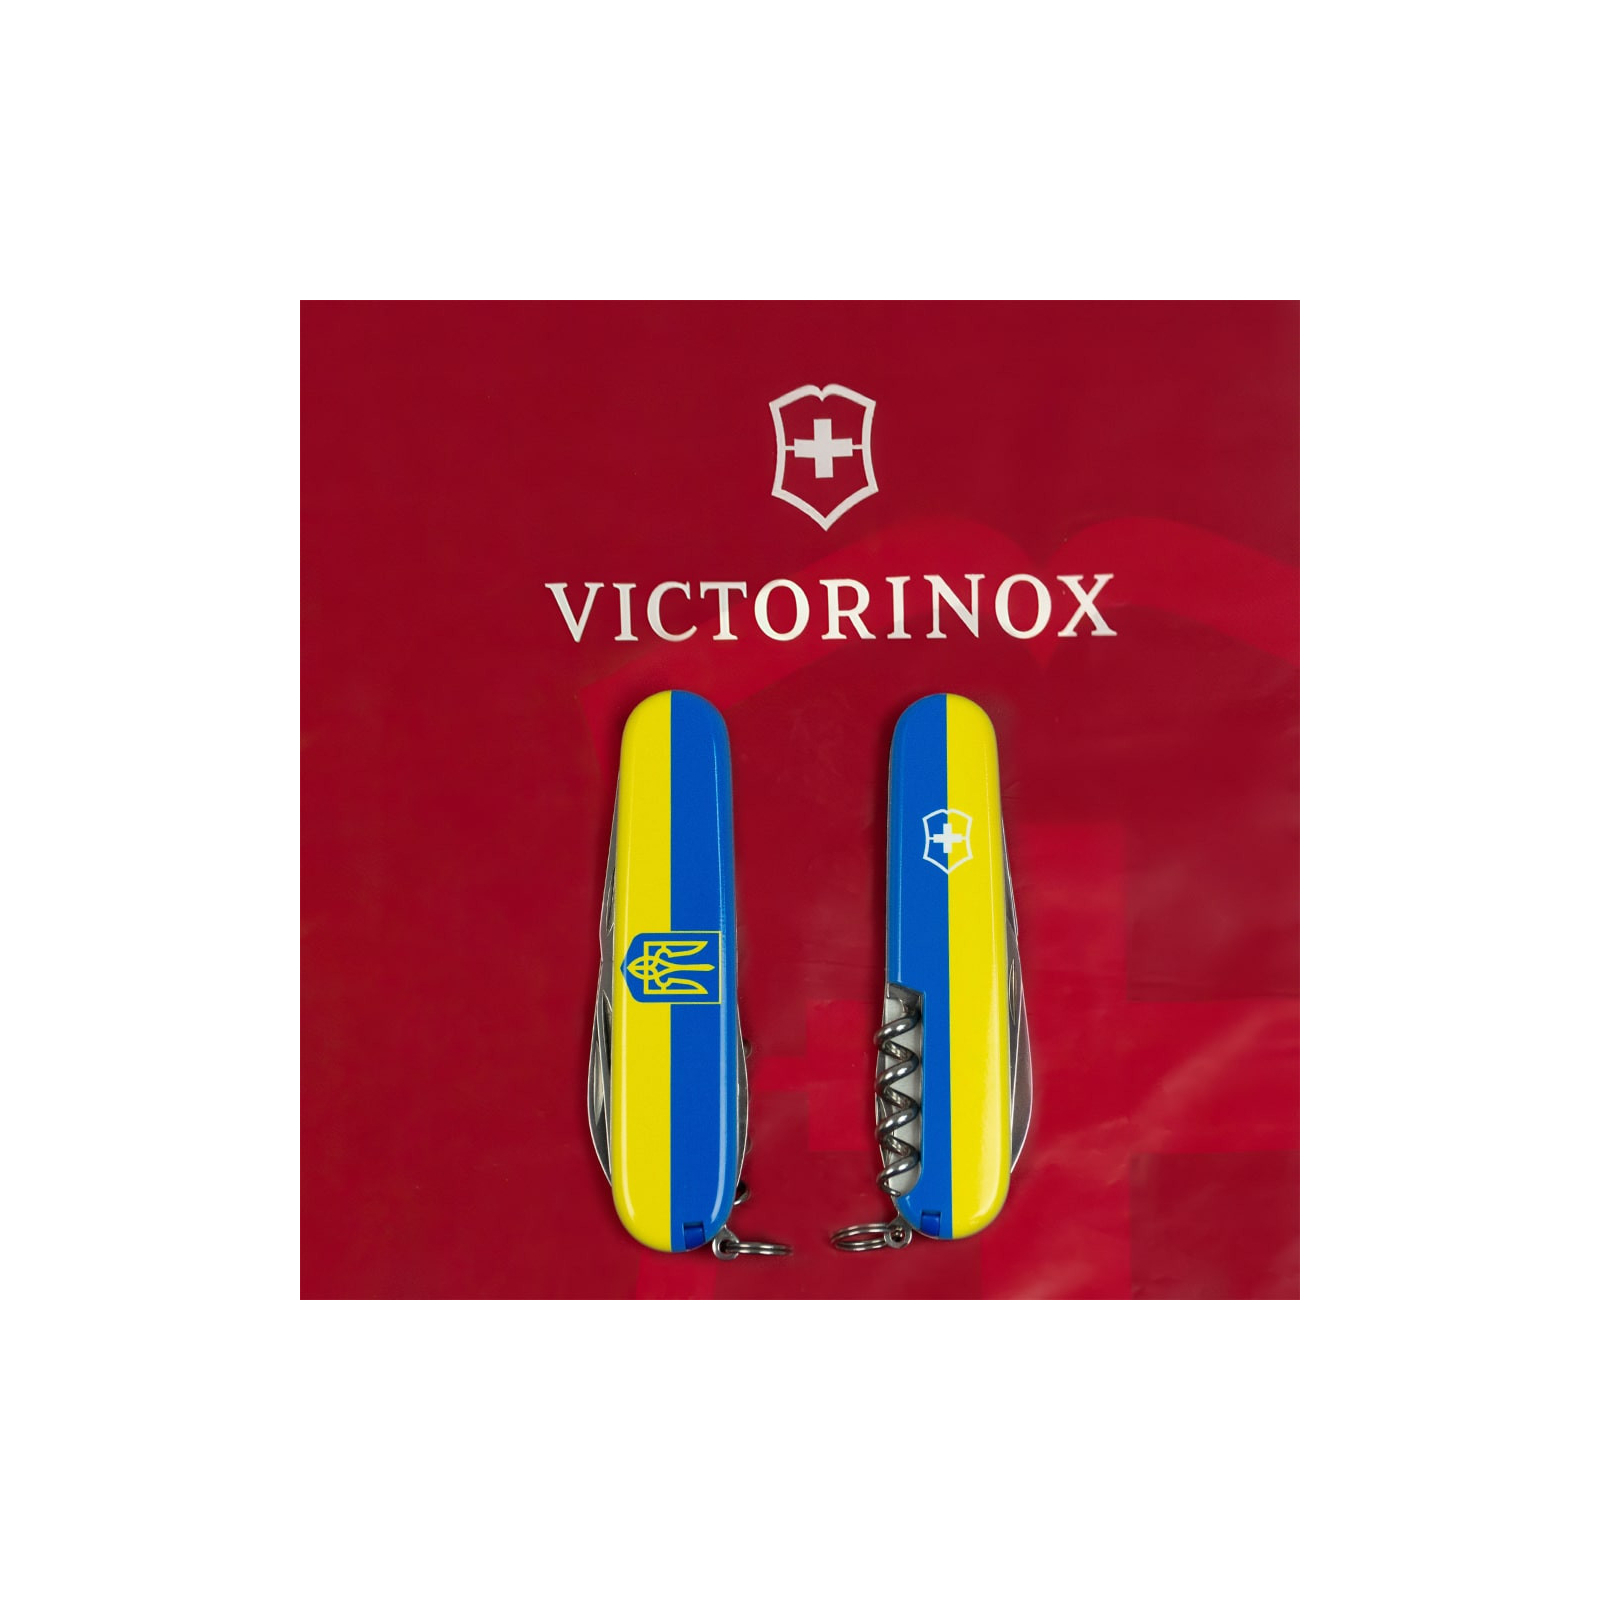 Нож Victorinox Spartan Ukraine 91 мм Жовто-синій малюнок (1.3603.7_T3100p) изображение 11